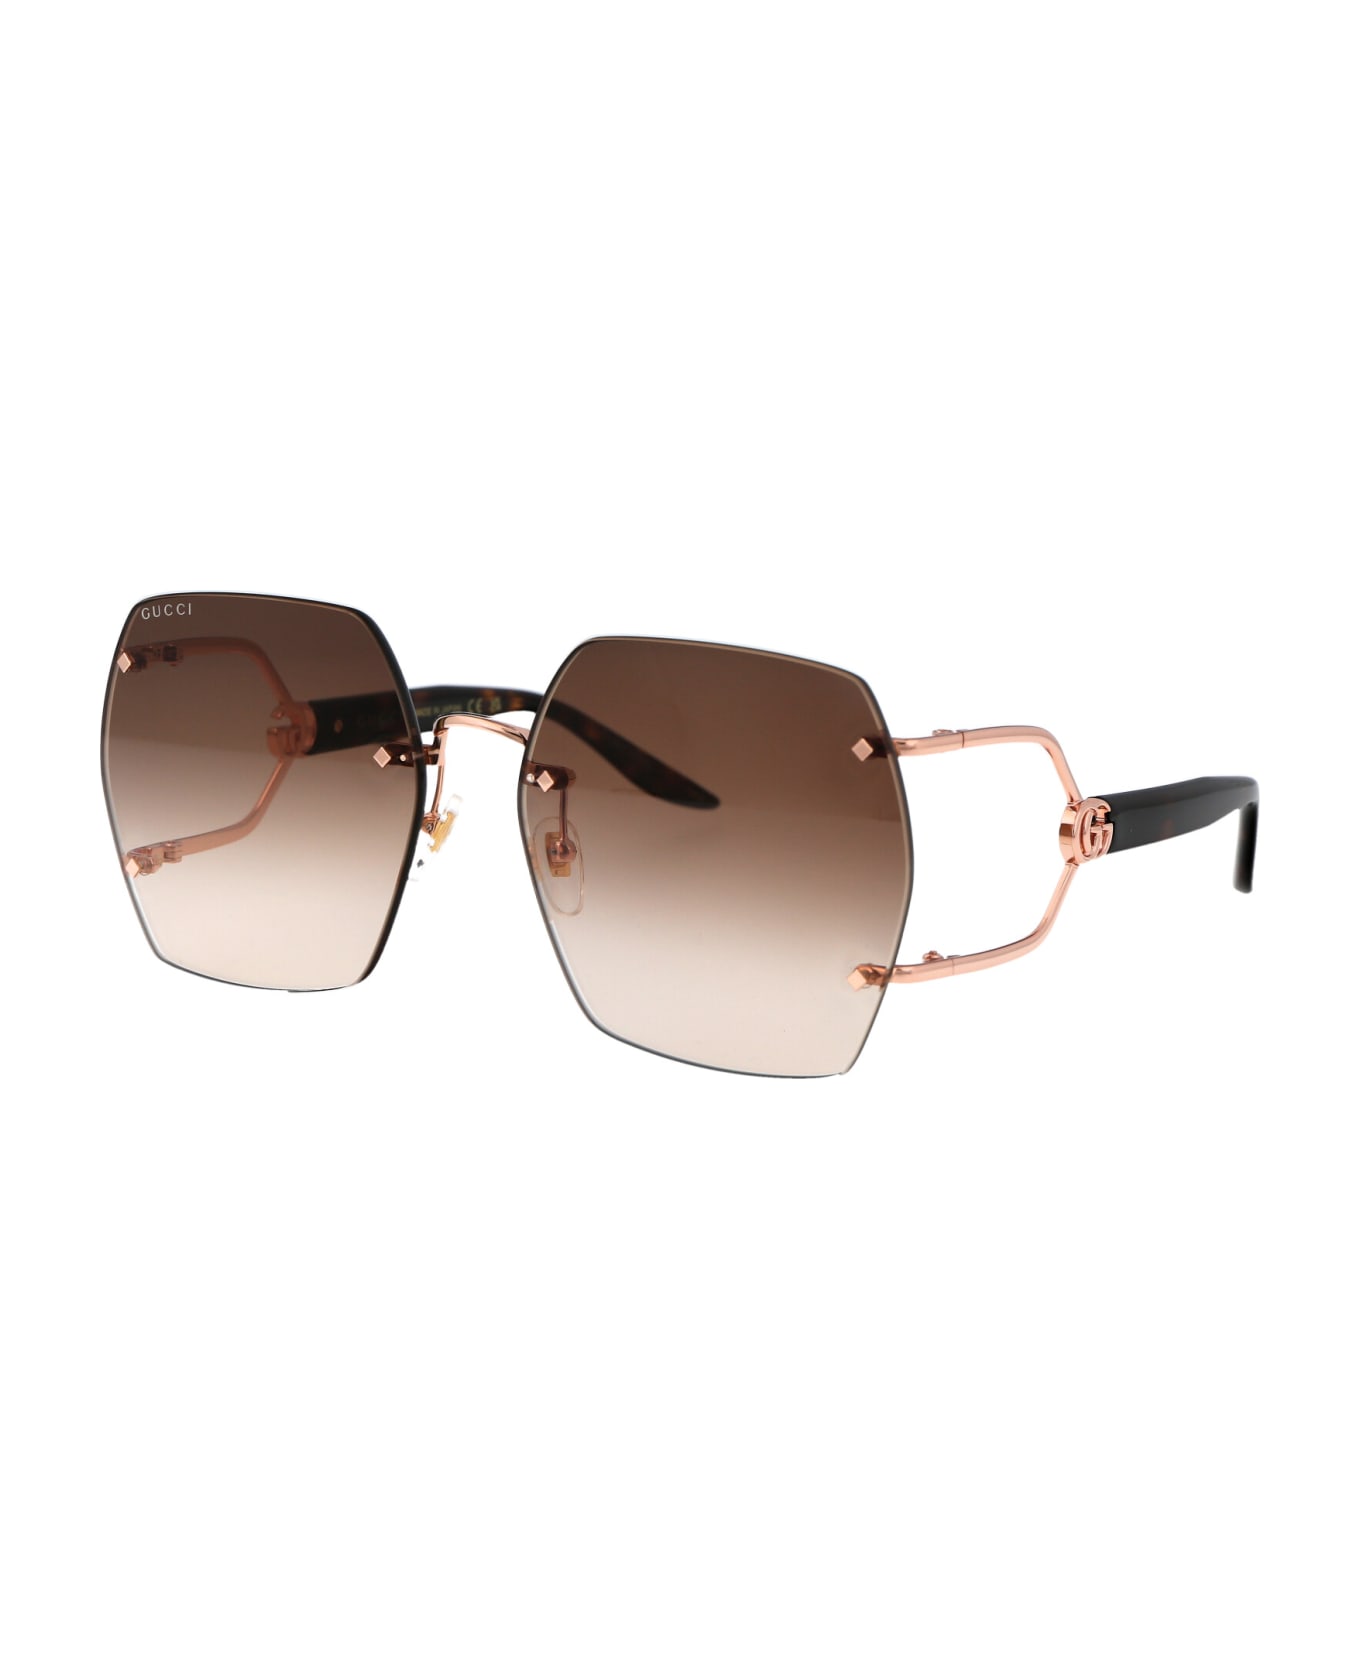 Gucci Eyewear Gg1562s Sunglasses - 002 GOLD HAVANA BROWN サングラス